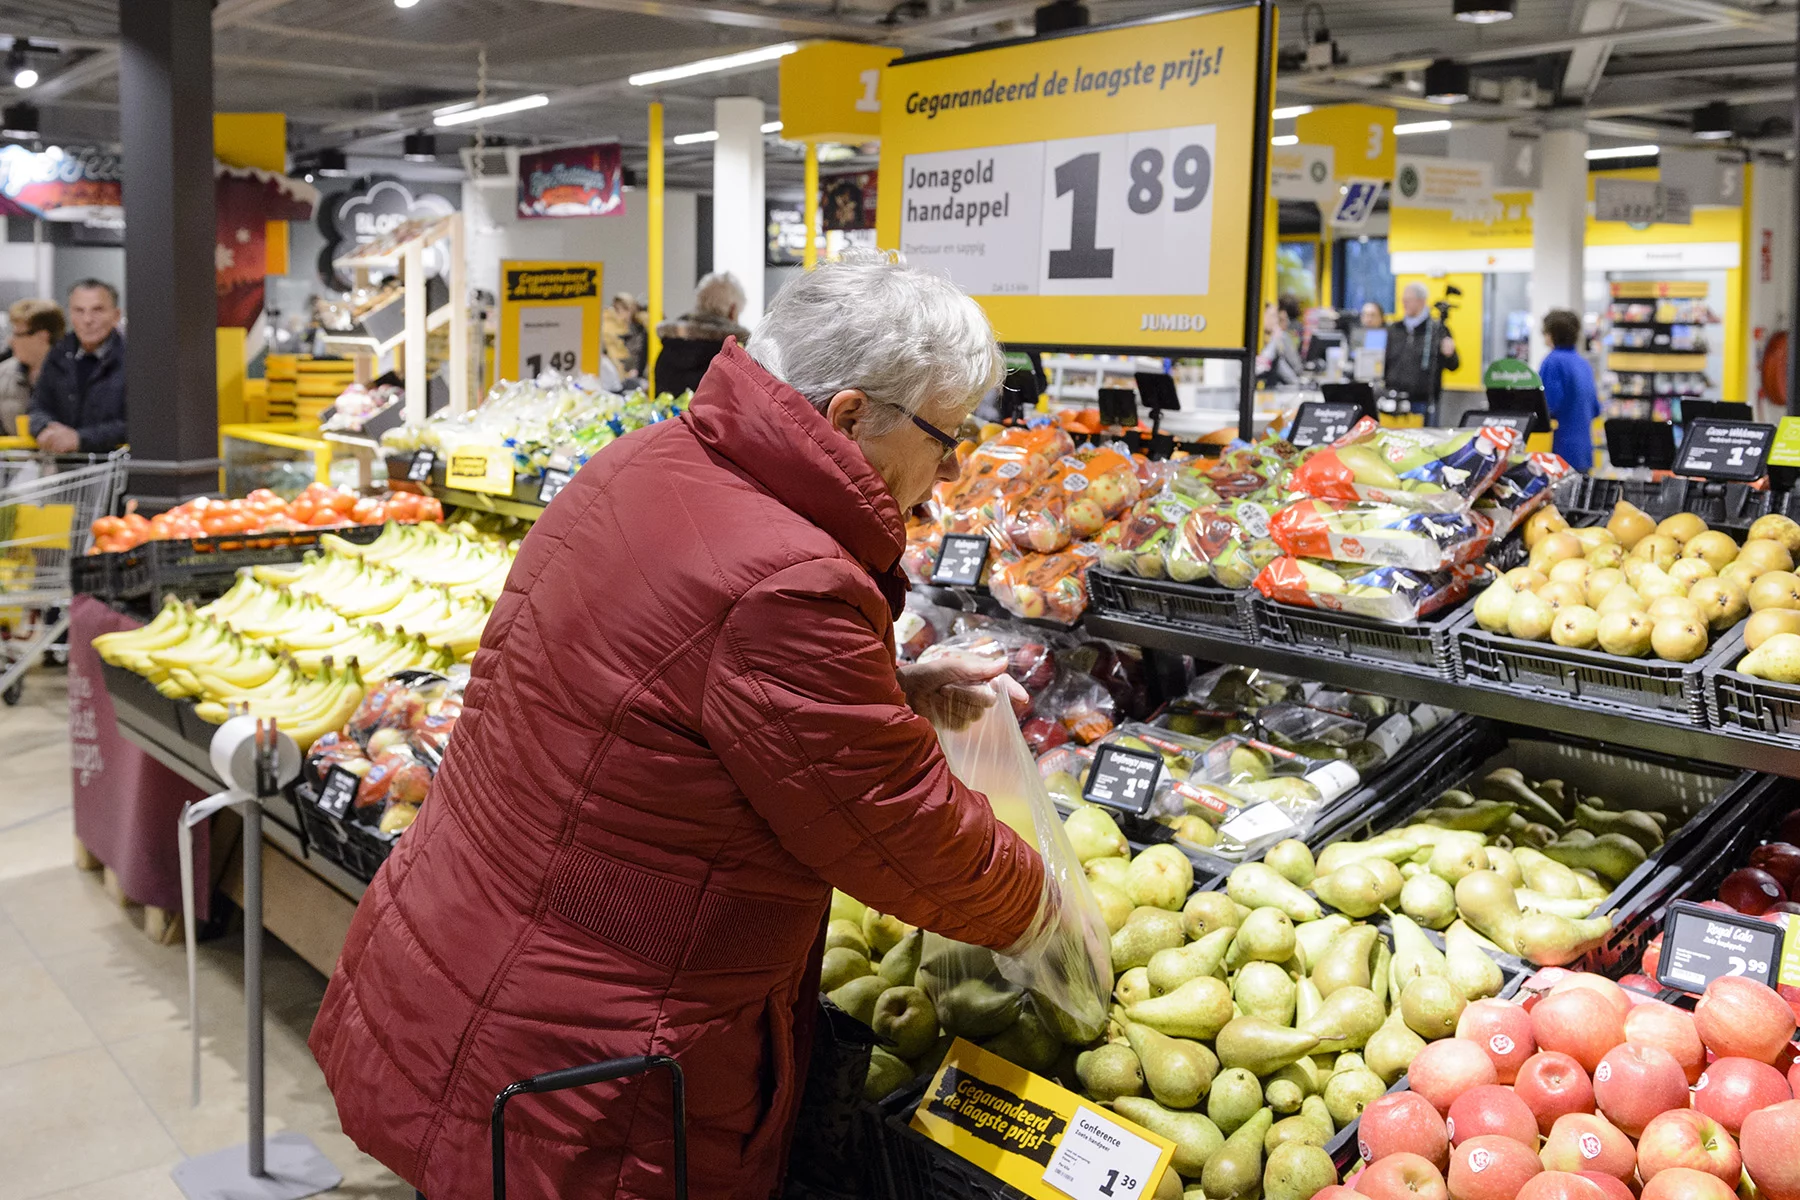 Produce at Jumbo, a Dutch supermarket chain